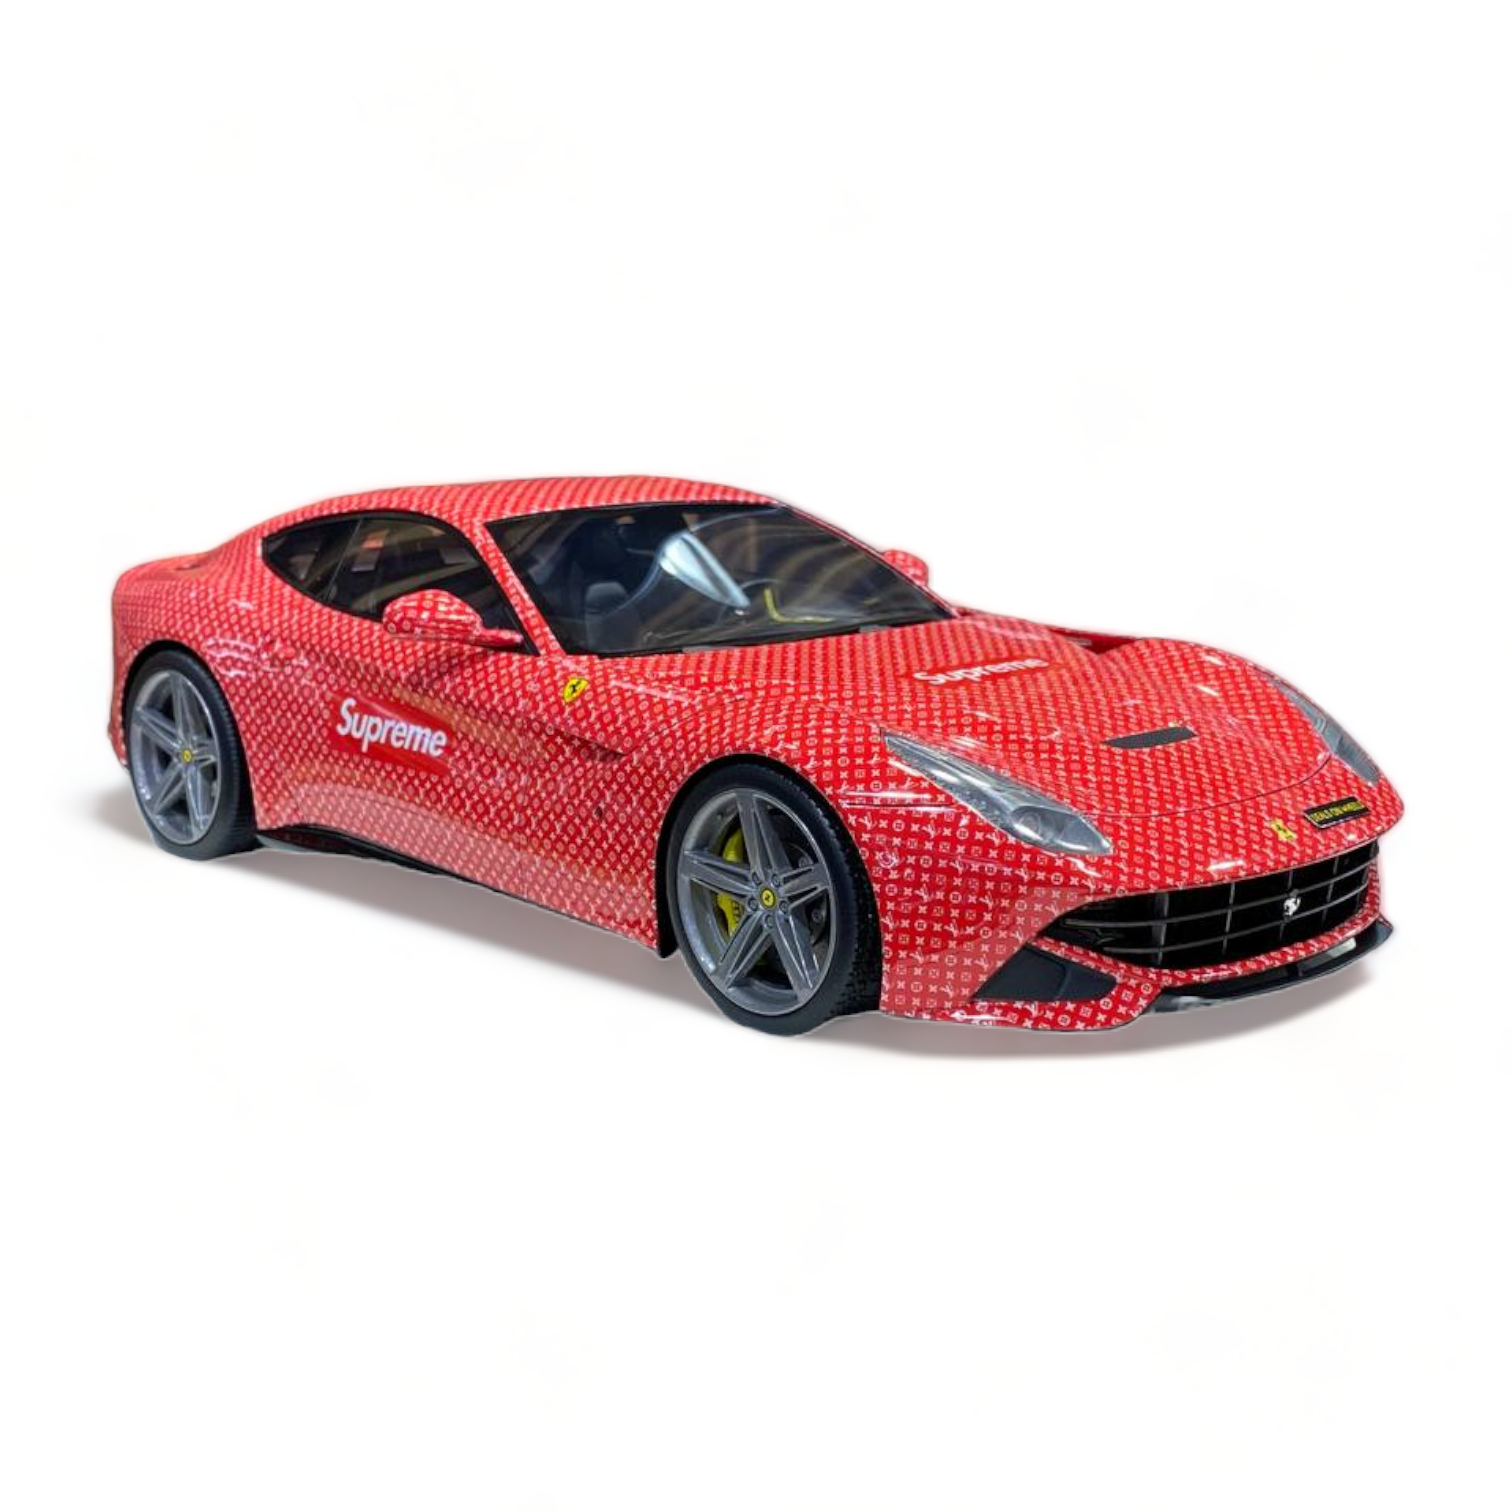 Ferrari F12 Berlinetta in Louis Vuitton Wrapping for Sale on